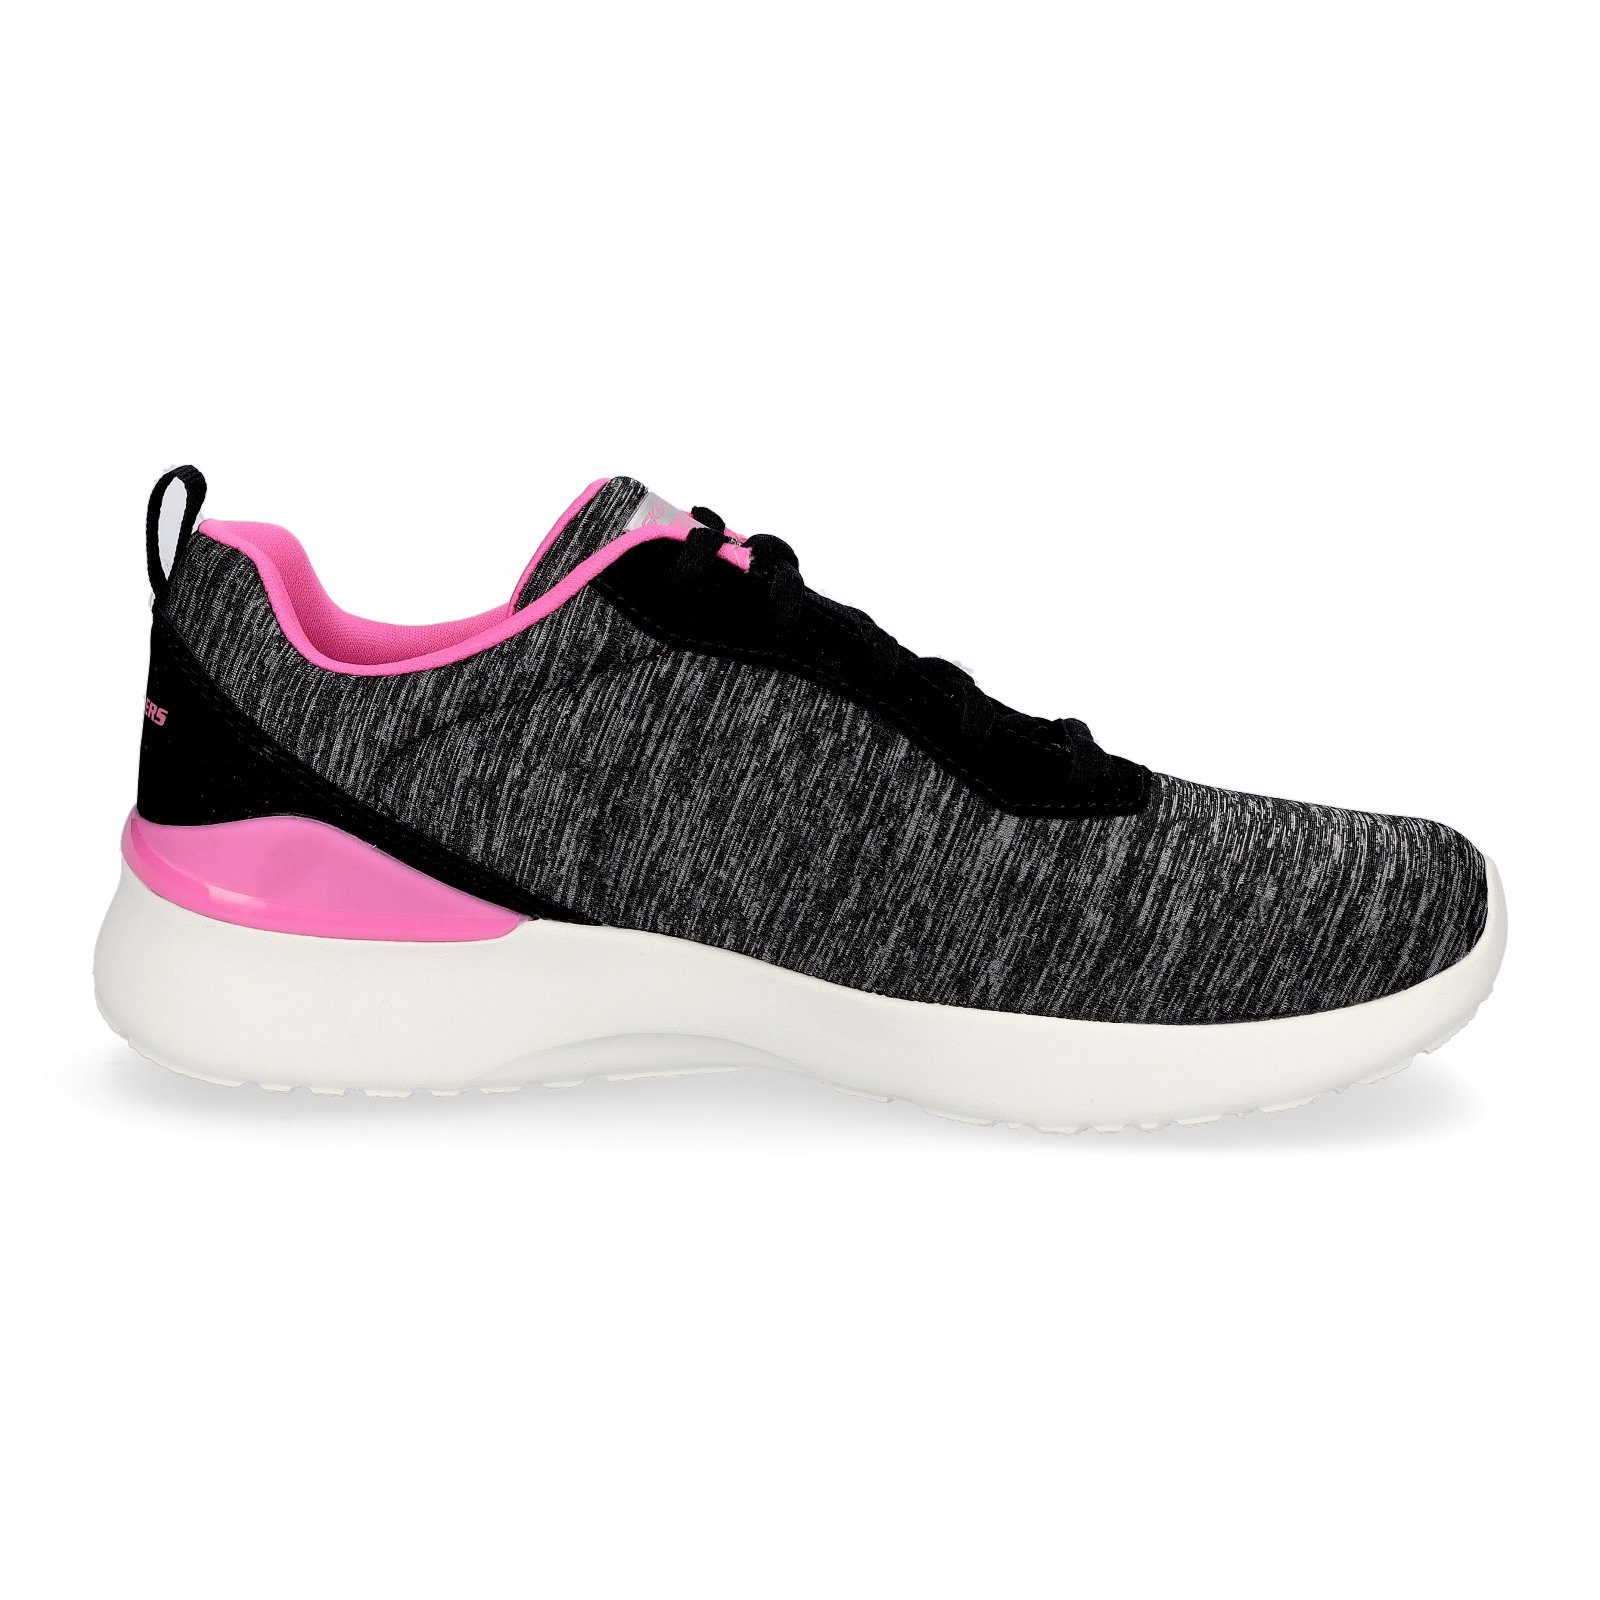 Skechers Skechers Damen Sneaker Paradise Waves pink black/hot Sneaker schwarz pink